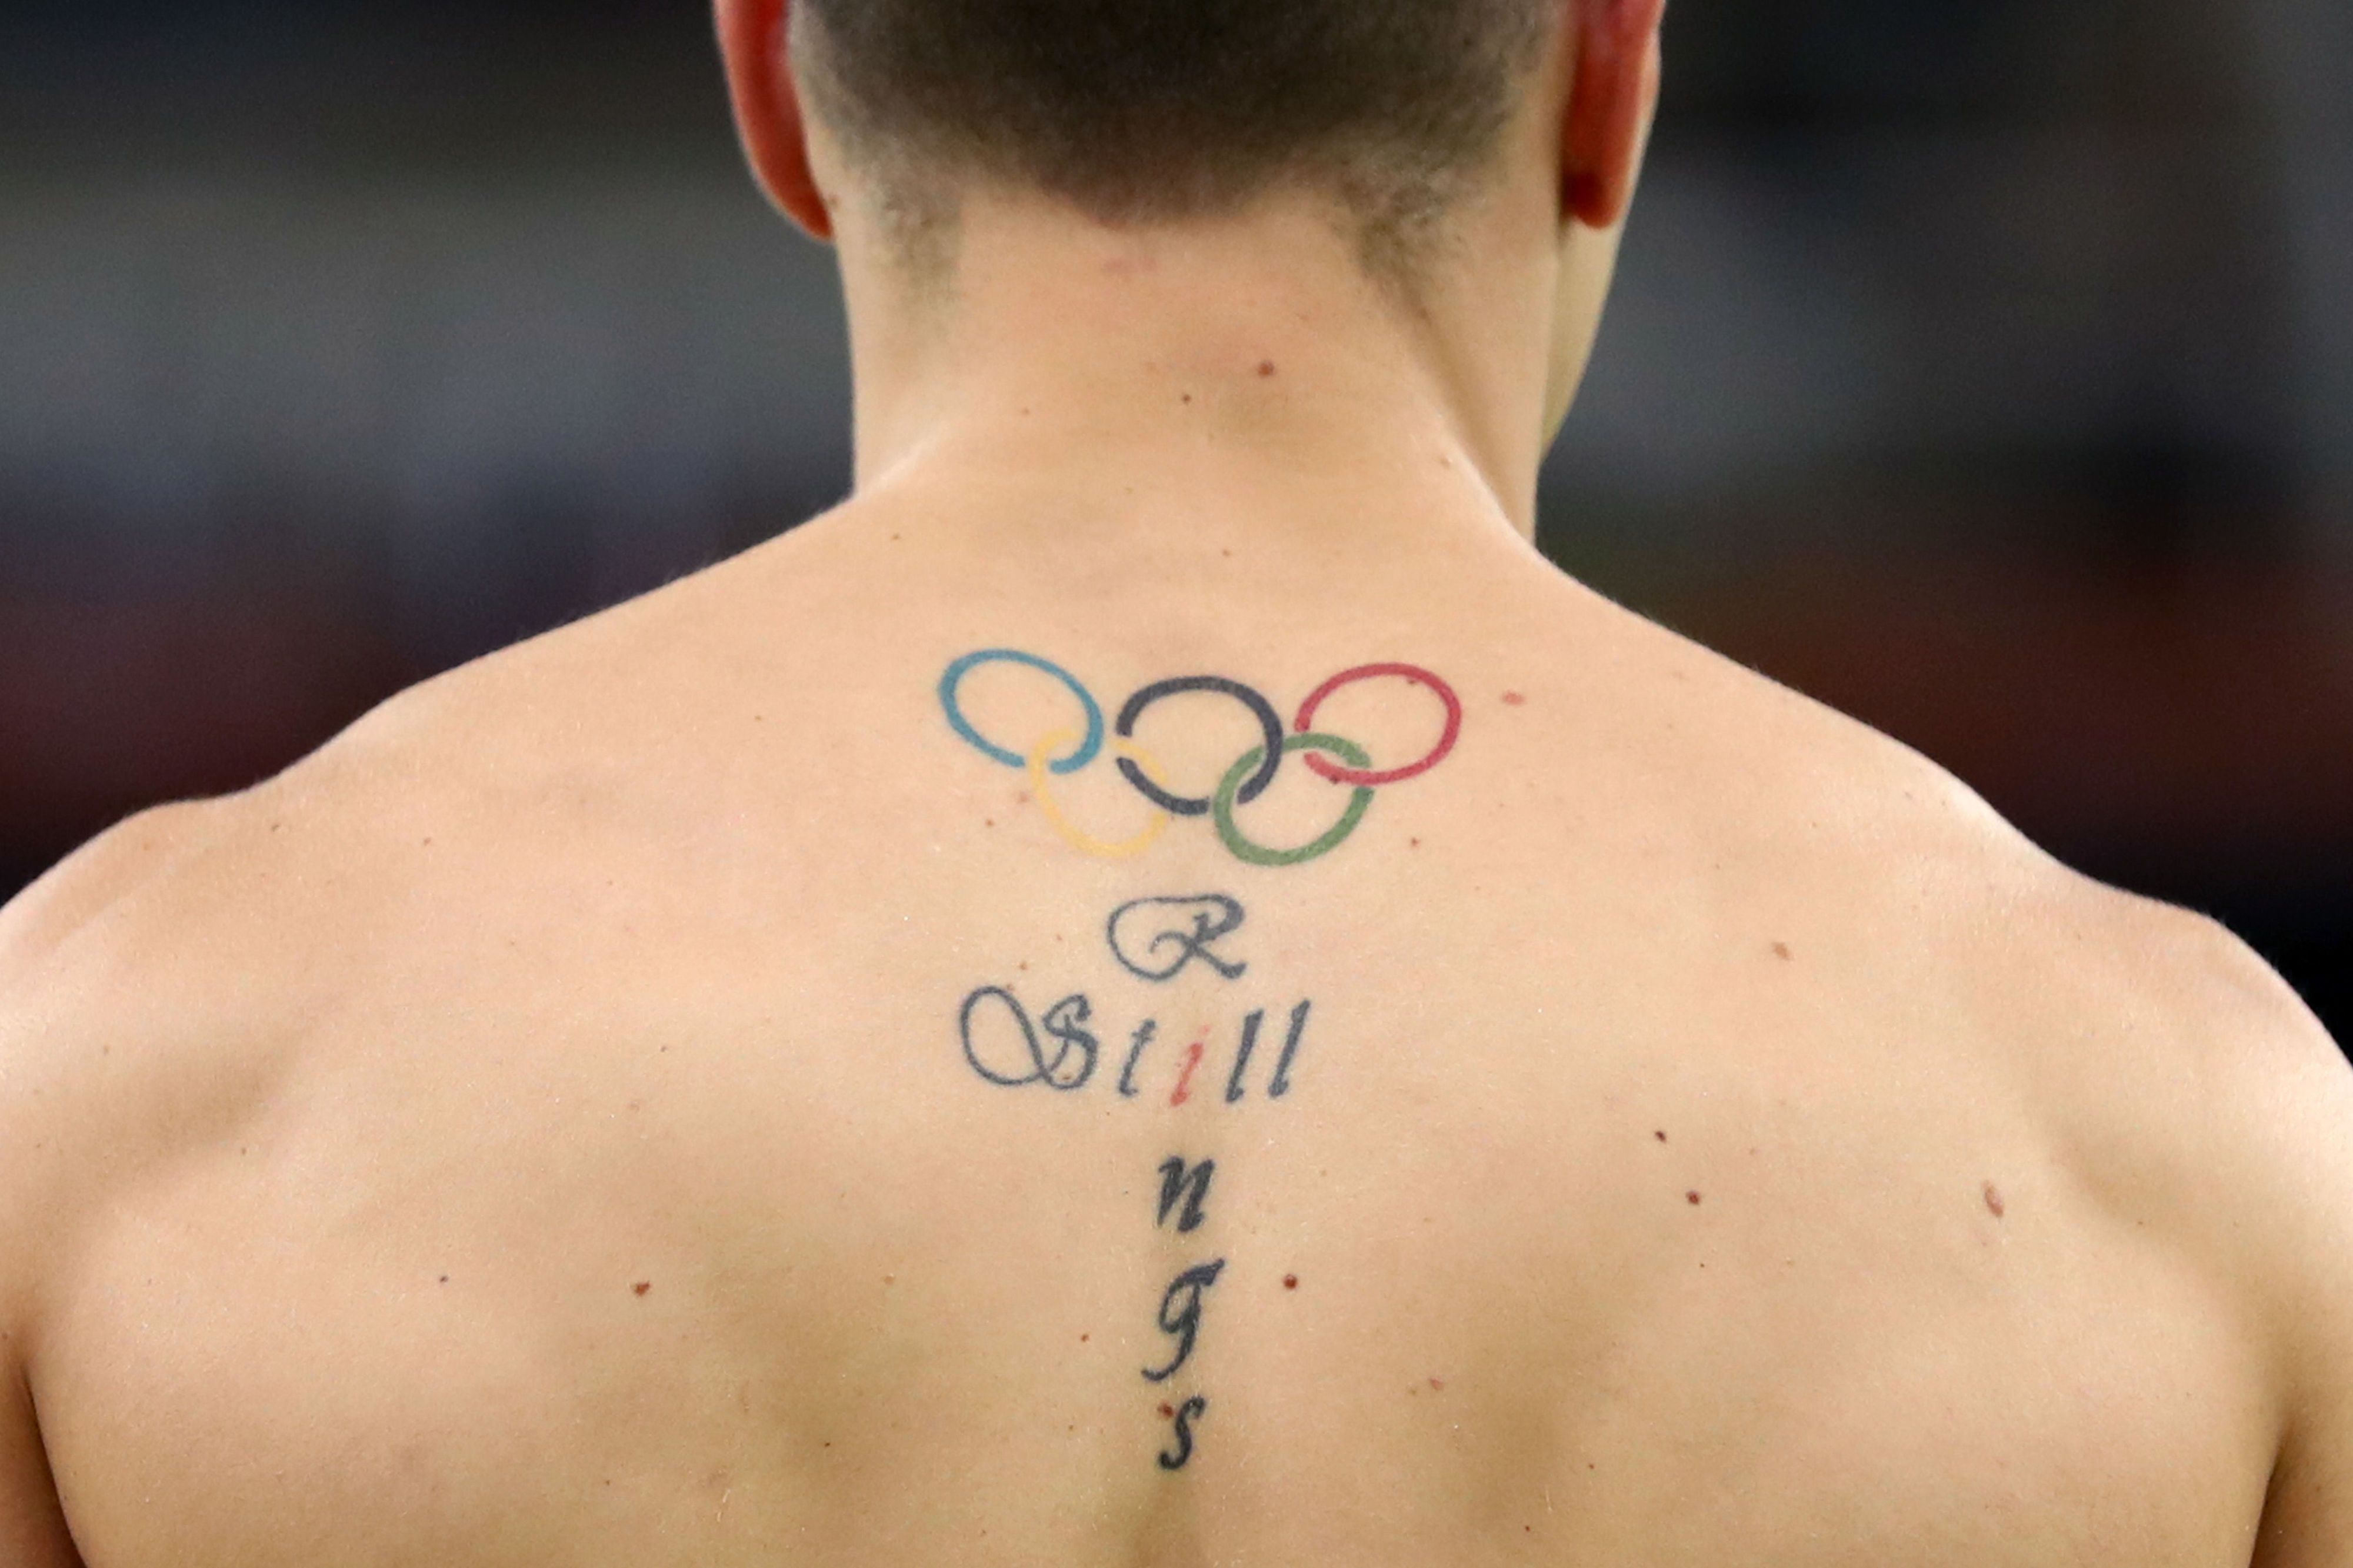 Tattoo uploaded by Robert Davies • Olympic Rings Tattoo #OlympicTattoos  #OlympicRingTattoos #OlympicRings #SportsTattoo #AthleteTattoos • Tattoodo